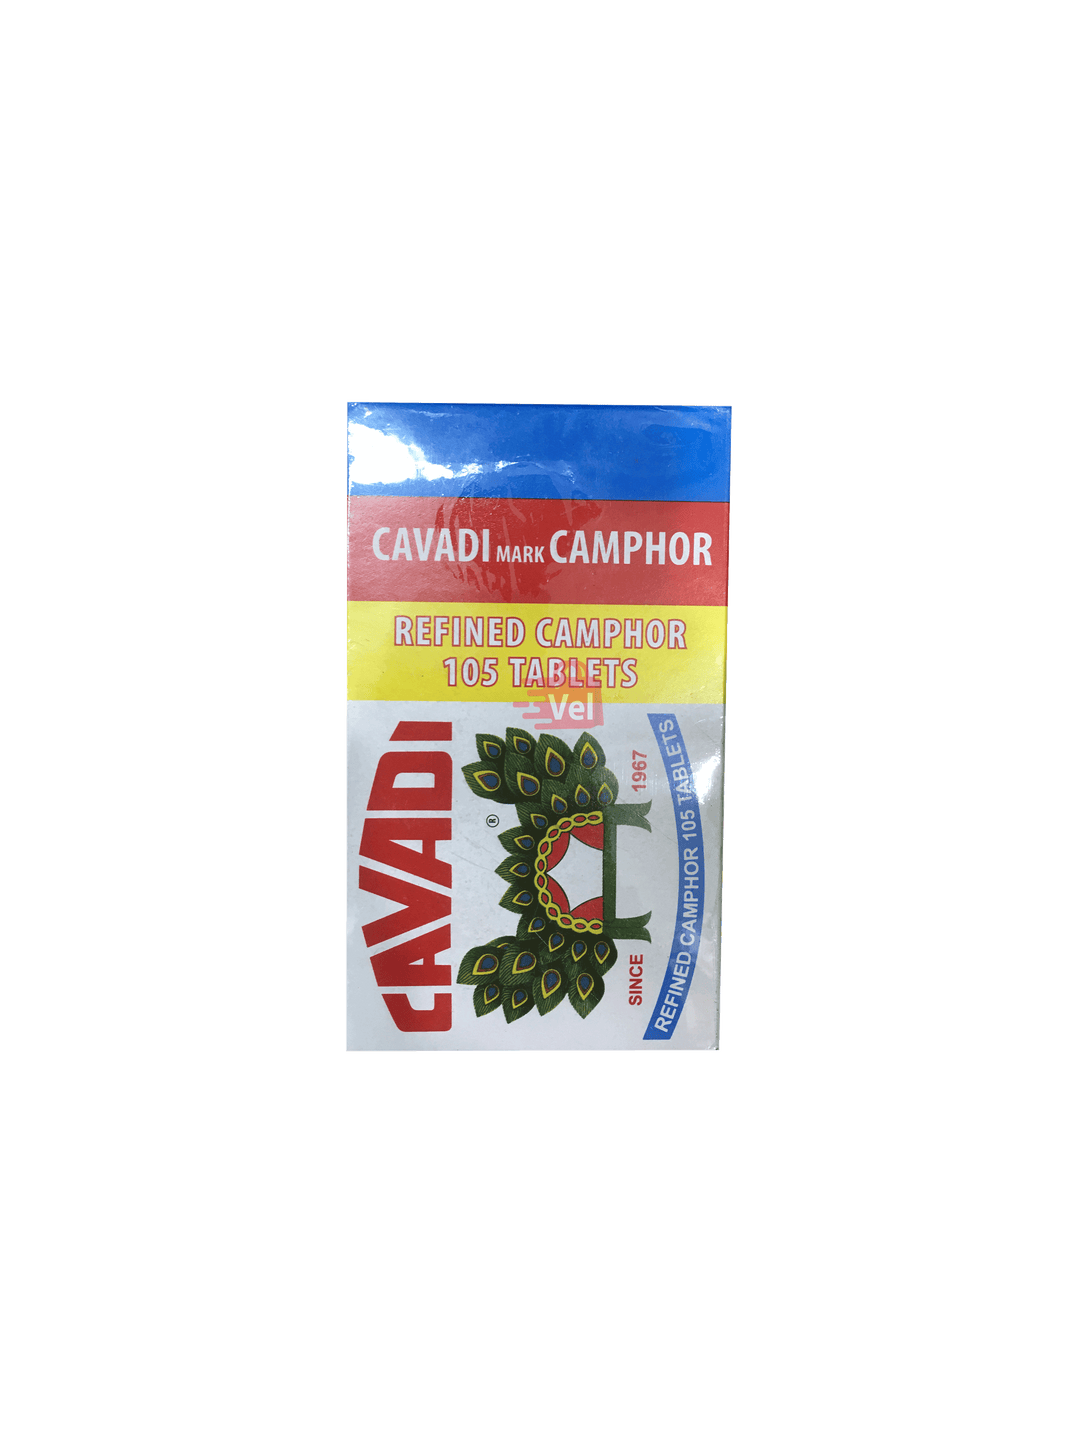 Cavadi Mark Camphor 105 Tablets